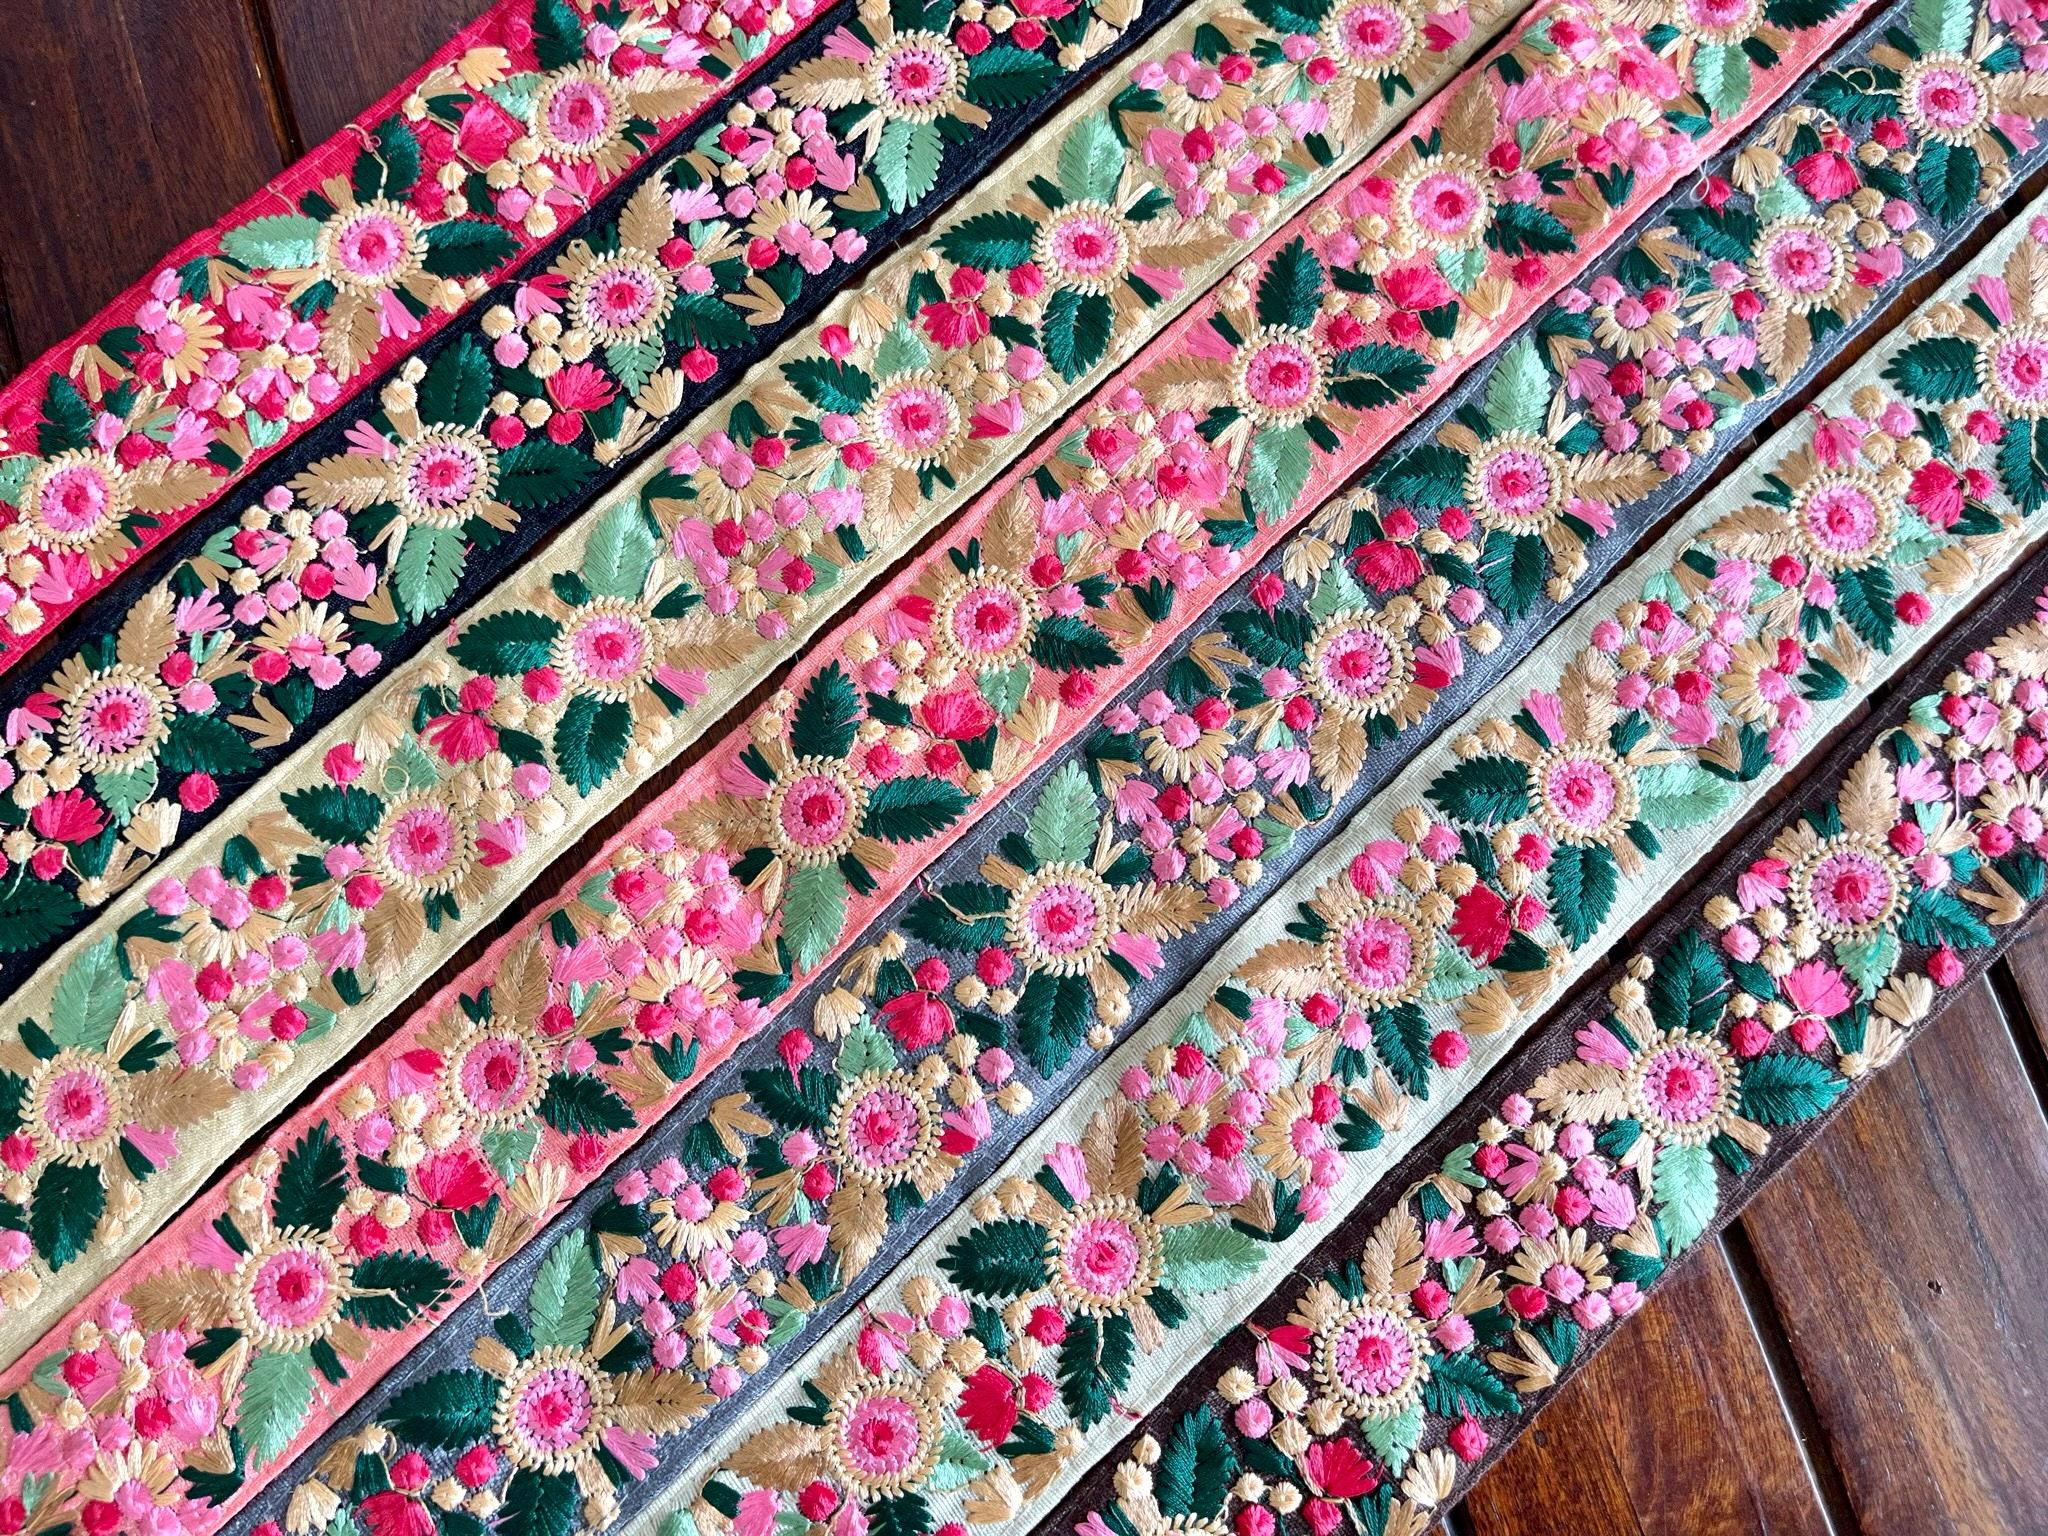 Embroidered Indian Trim by the Yard Indian Fabric Trim Sari Border Craft  Ribbon Sari Fabric Trimming Sewing Tape, Costume Trim Silk Ribbons 